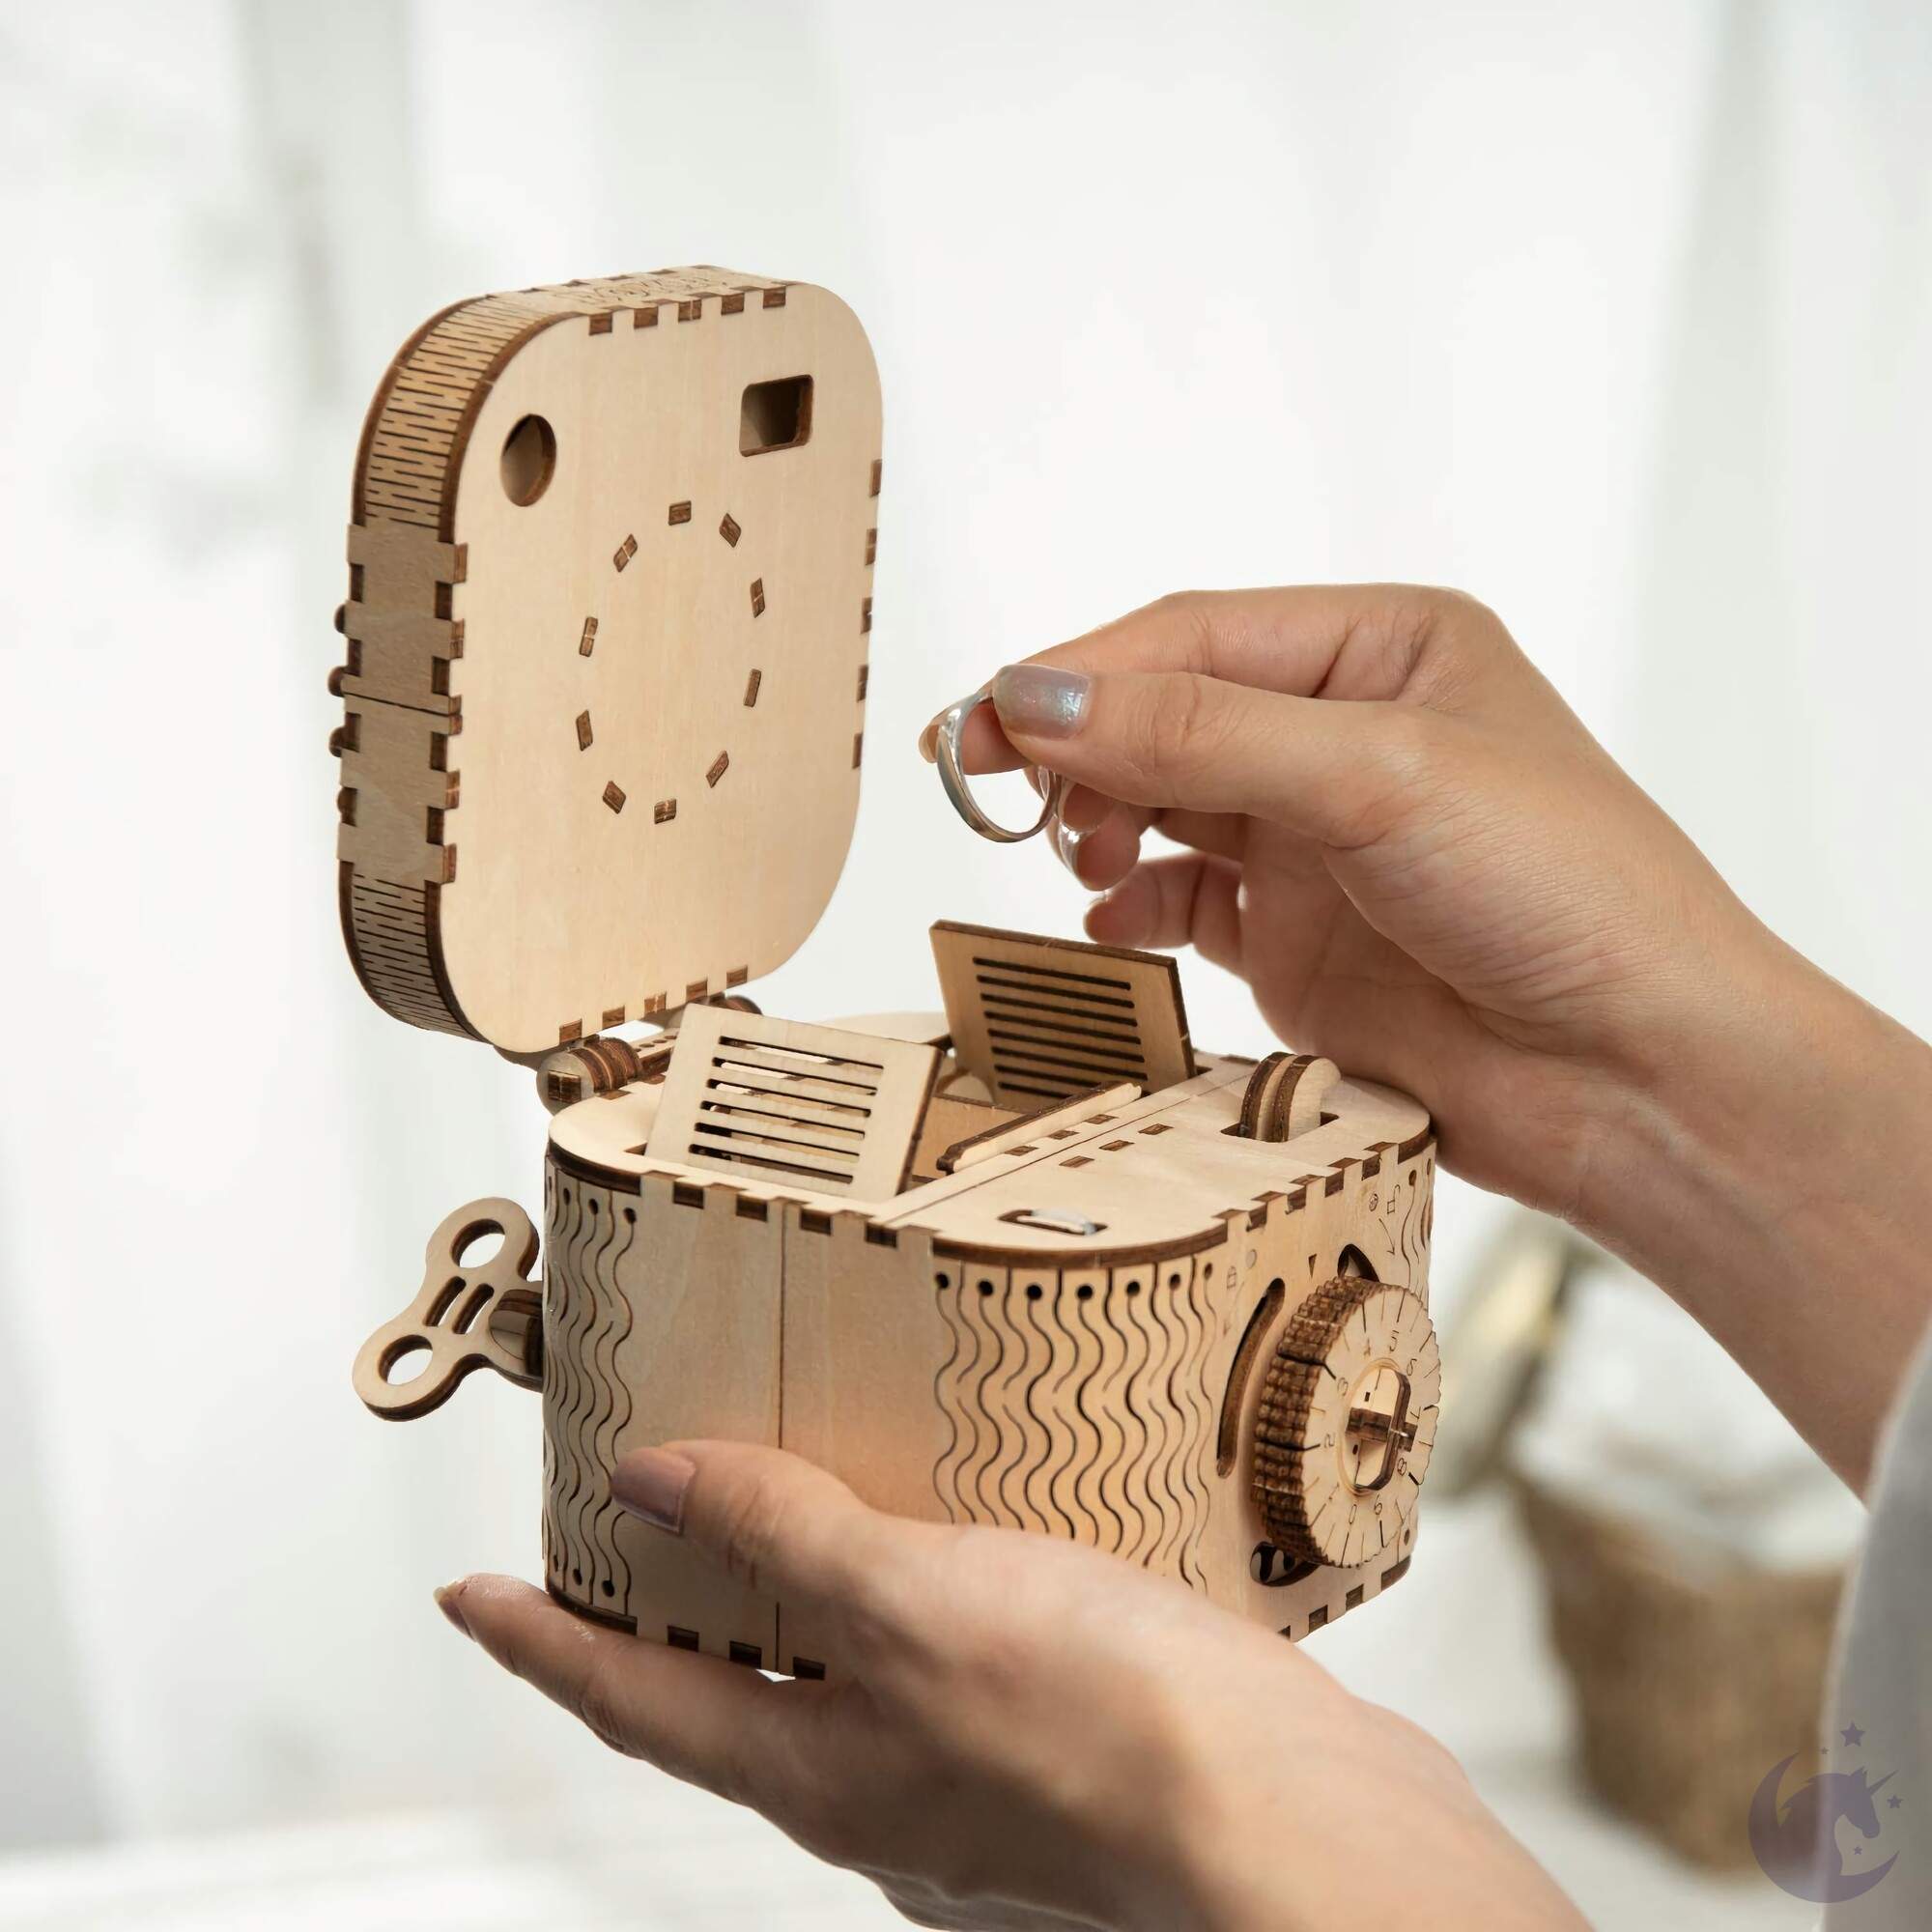 Canada Robotime ROKR Treasure Box DIY Mechanical Gears Puzzles